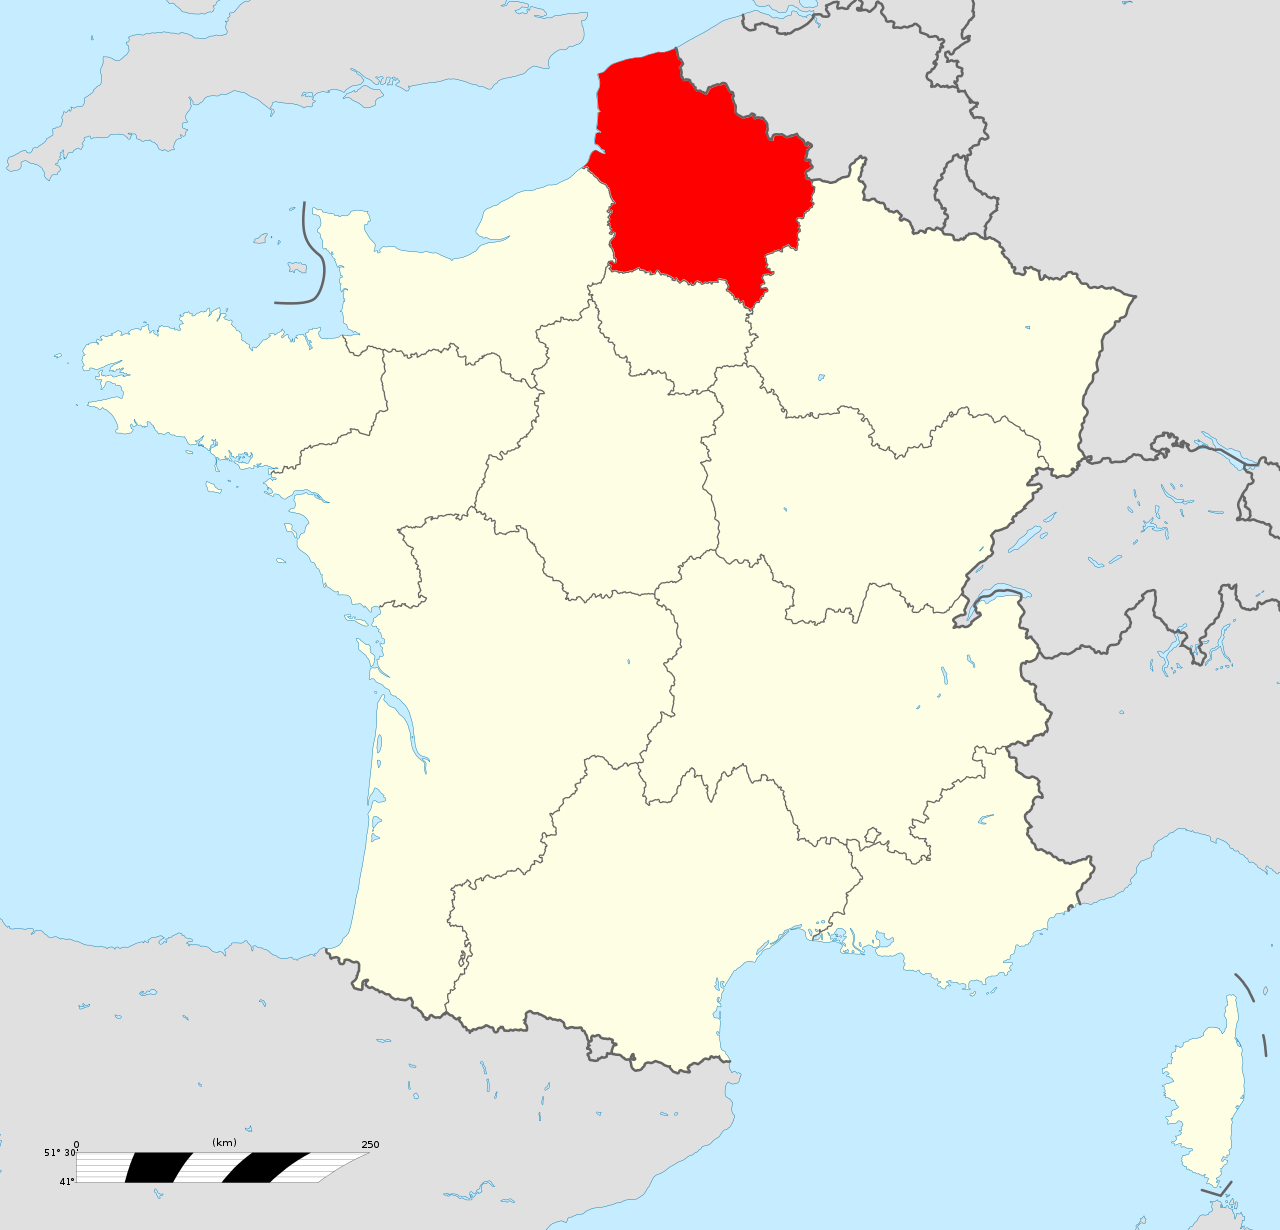 1800s Mansion Urbex location or around the region Hauts-de-France (Noorderdepartement), France